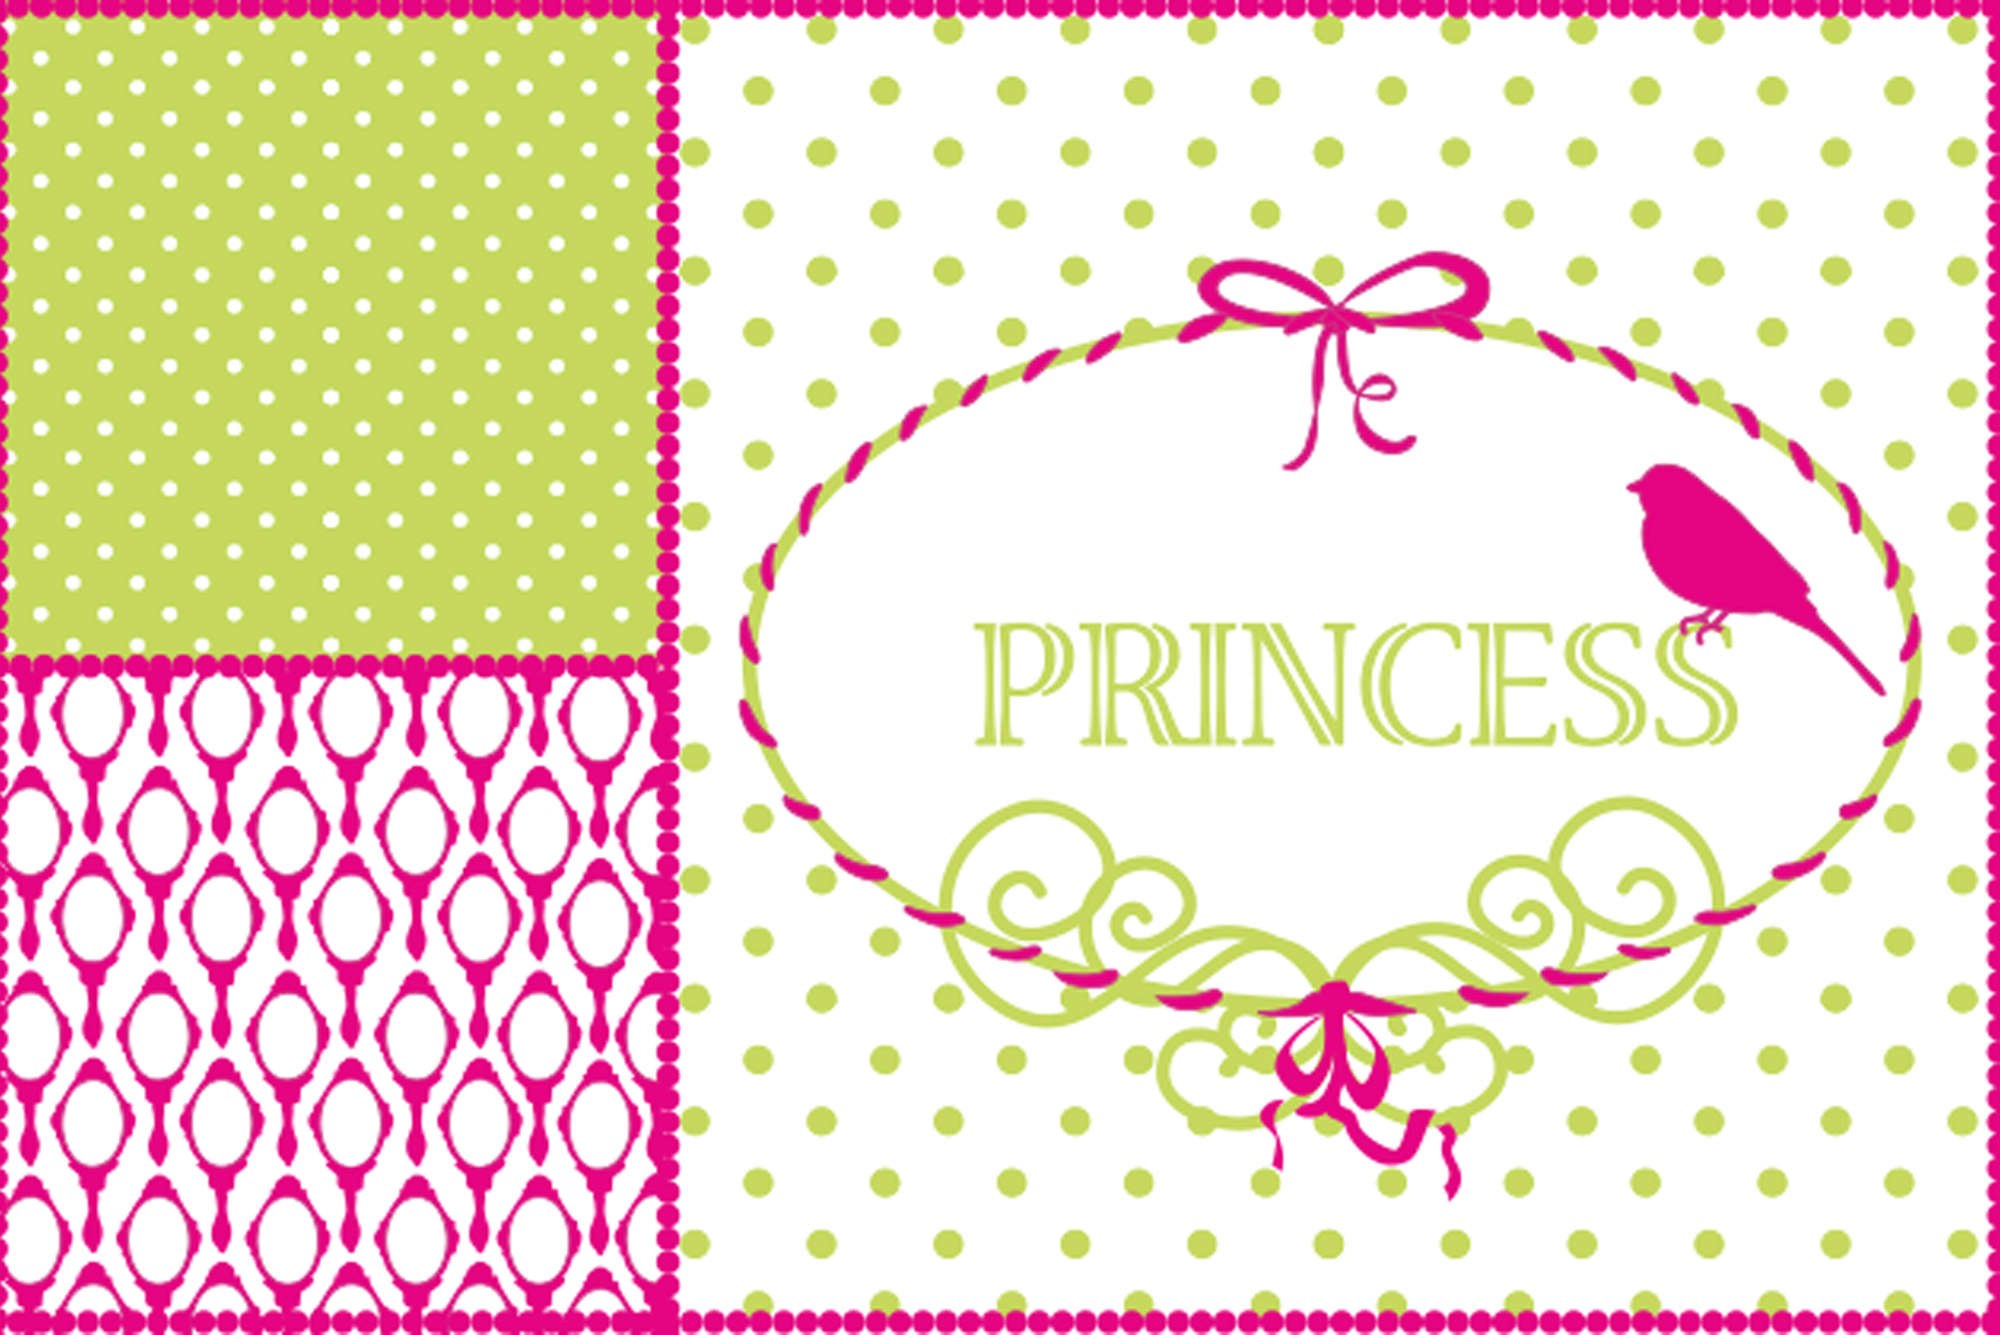             Fototapete im Kinderdesign mit Schriftzug "Princess" – Perlmutt Glattvlies
        